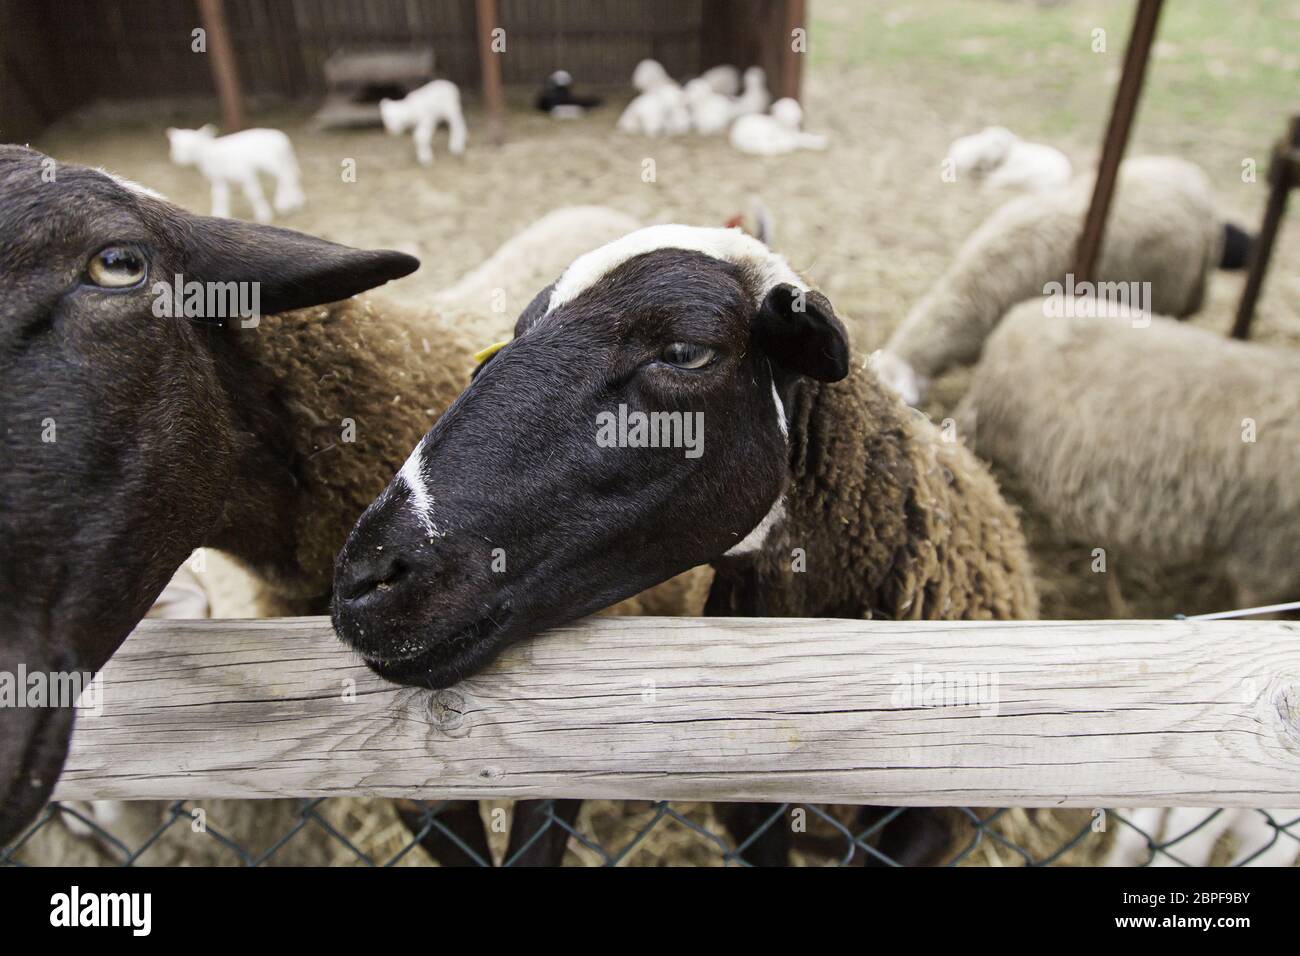 Sheep on a farm, detail of a mammal, farm animal, wool Stock Photo